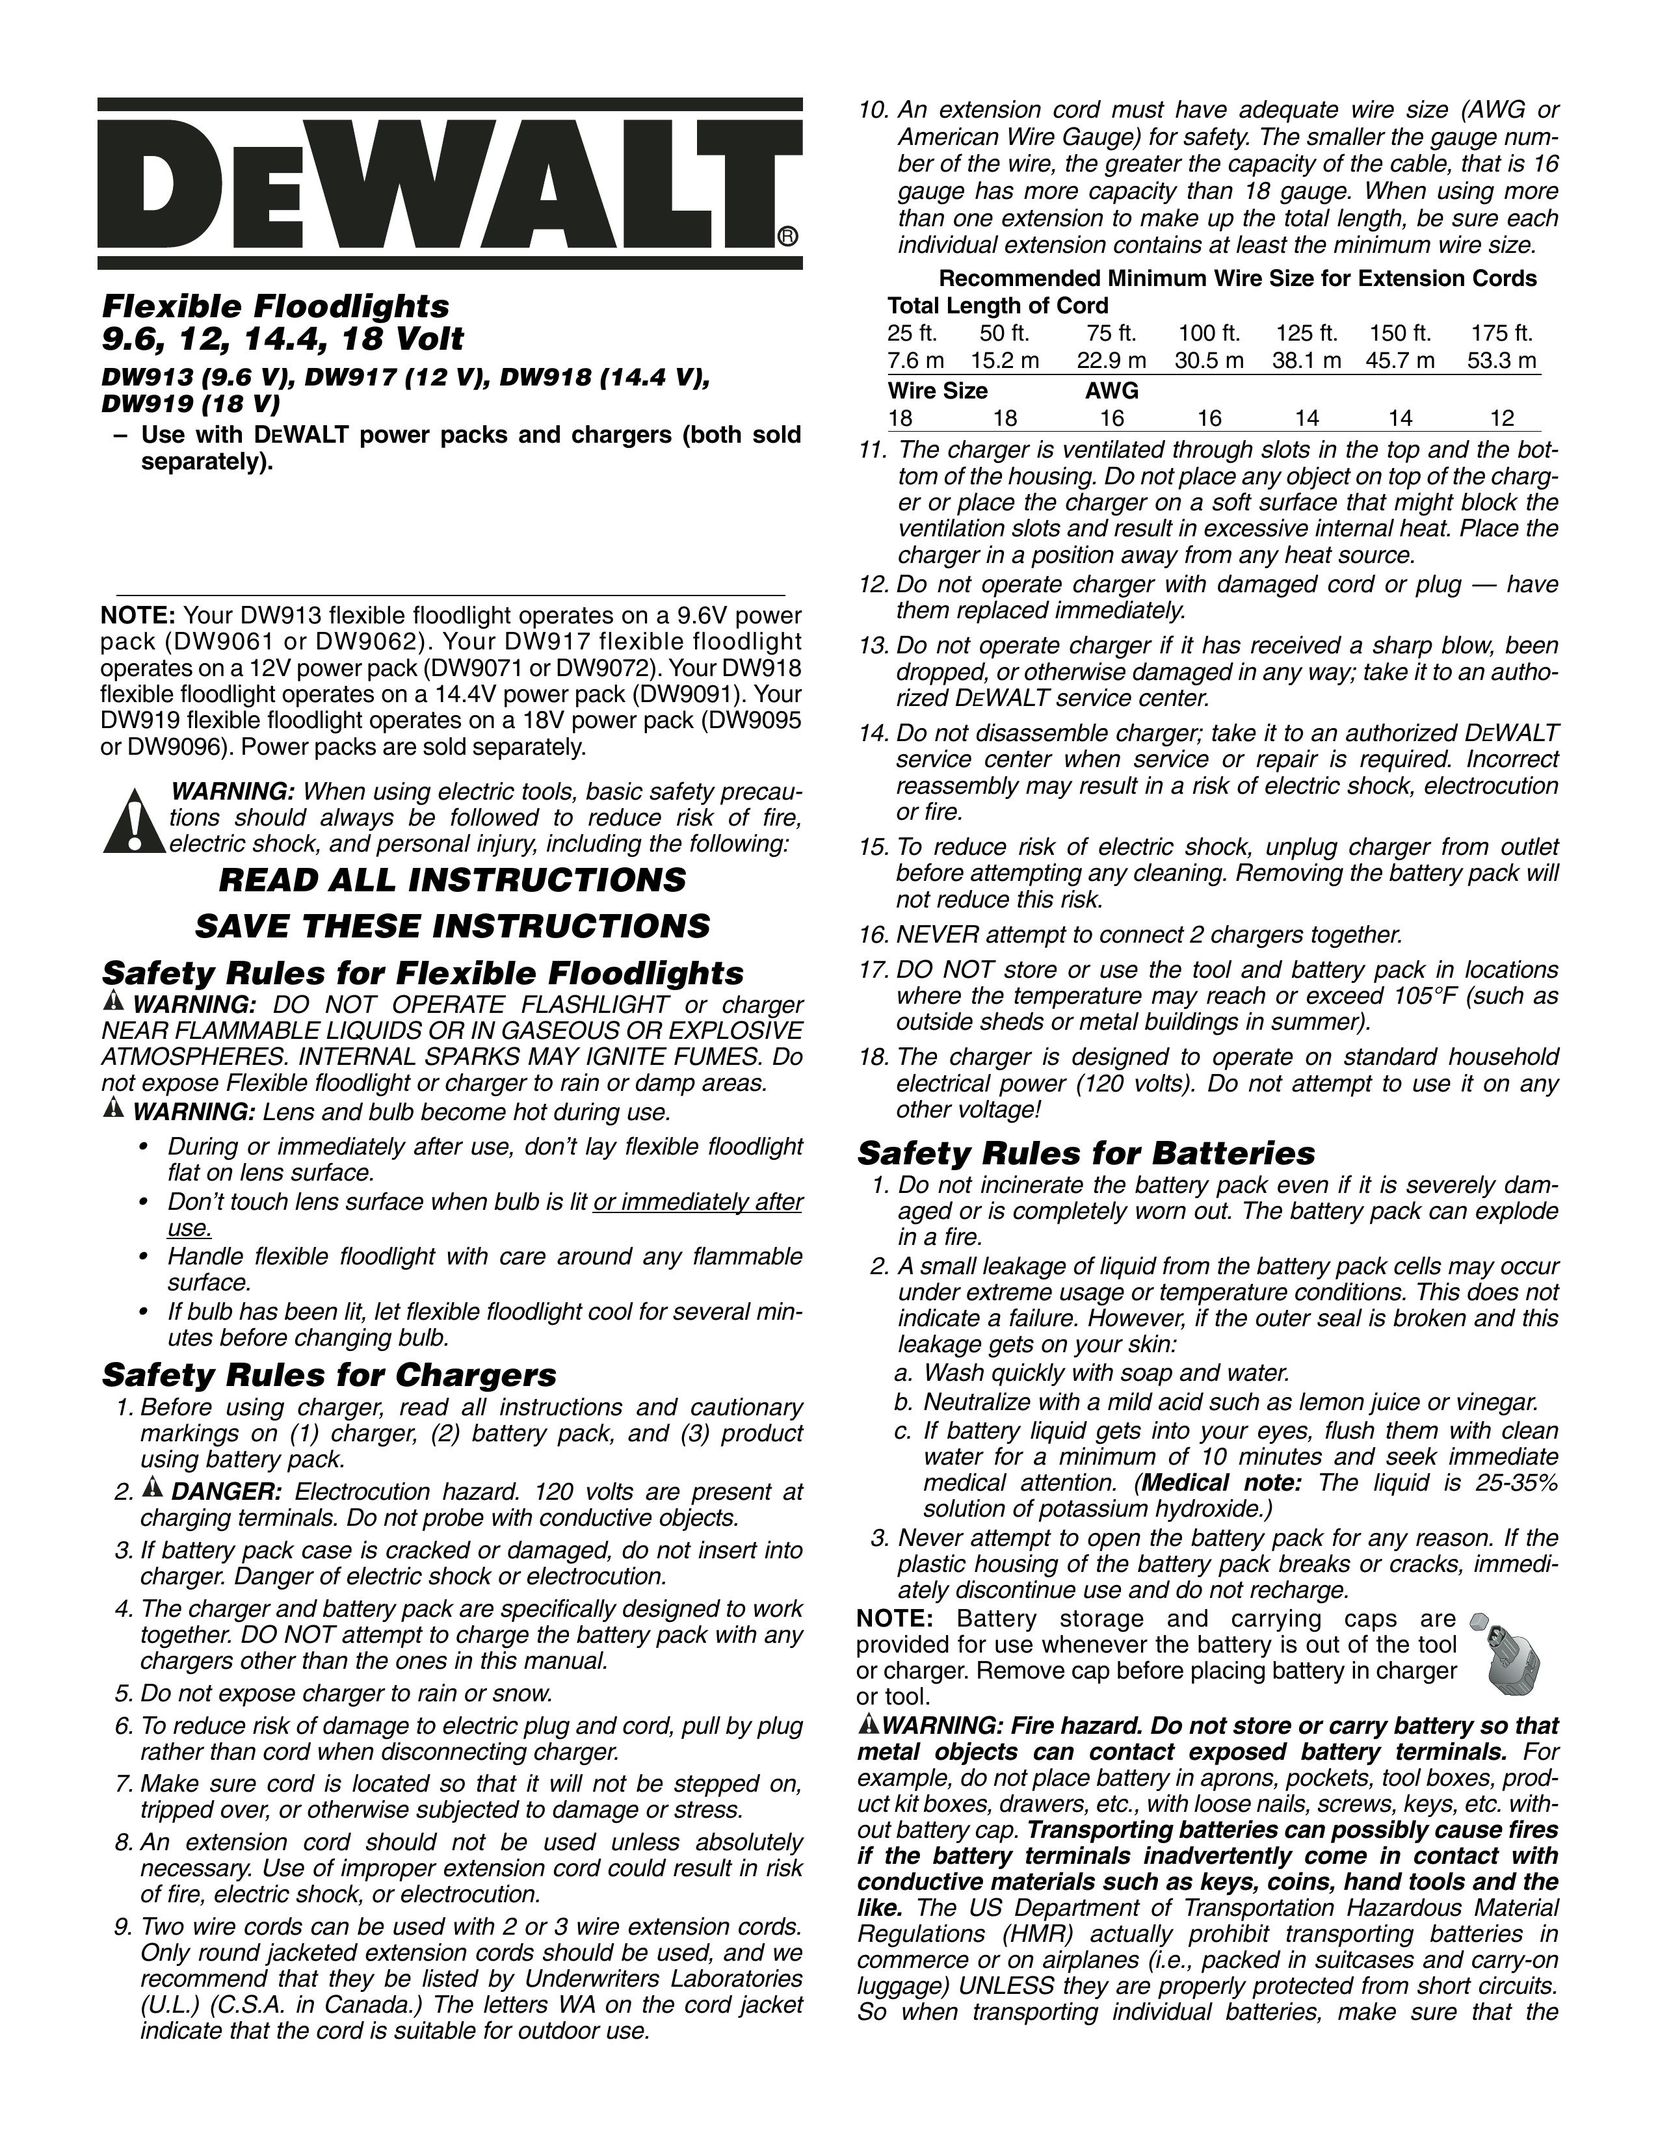 DeWalt DW918 Home Safety Product User Manual